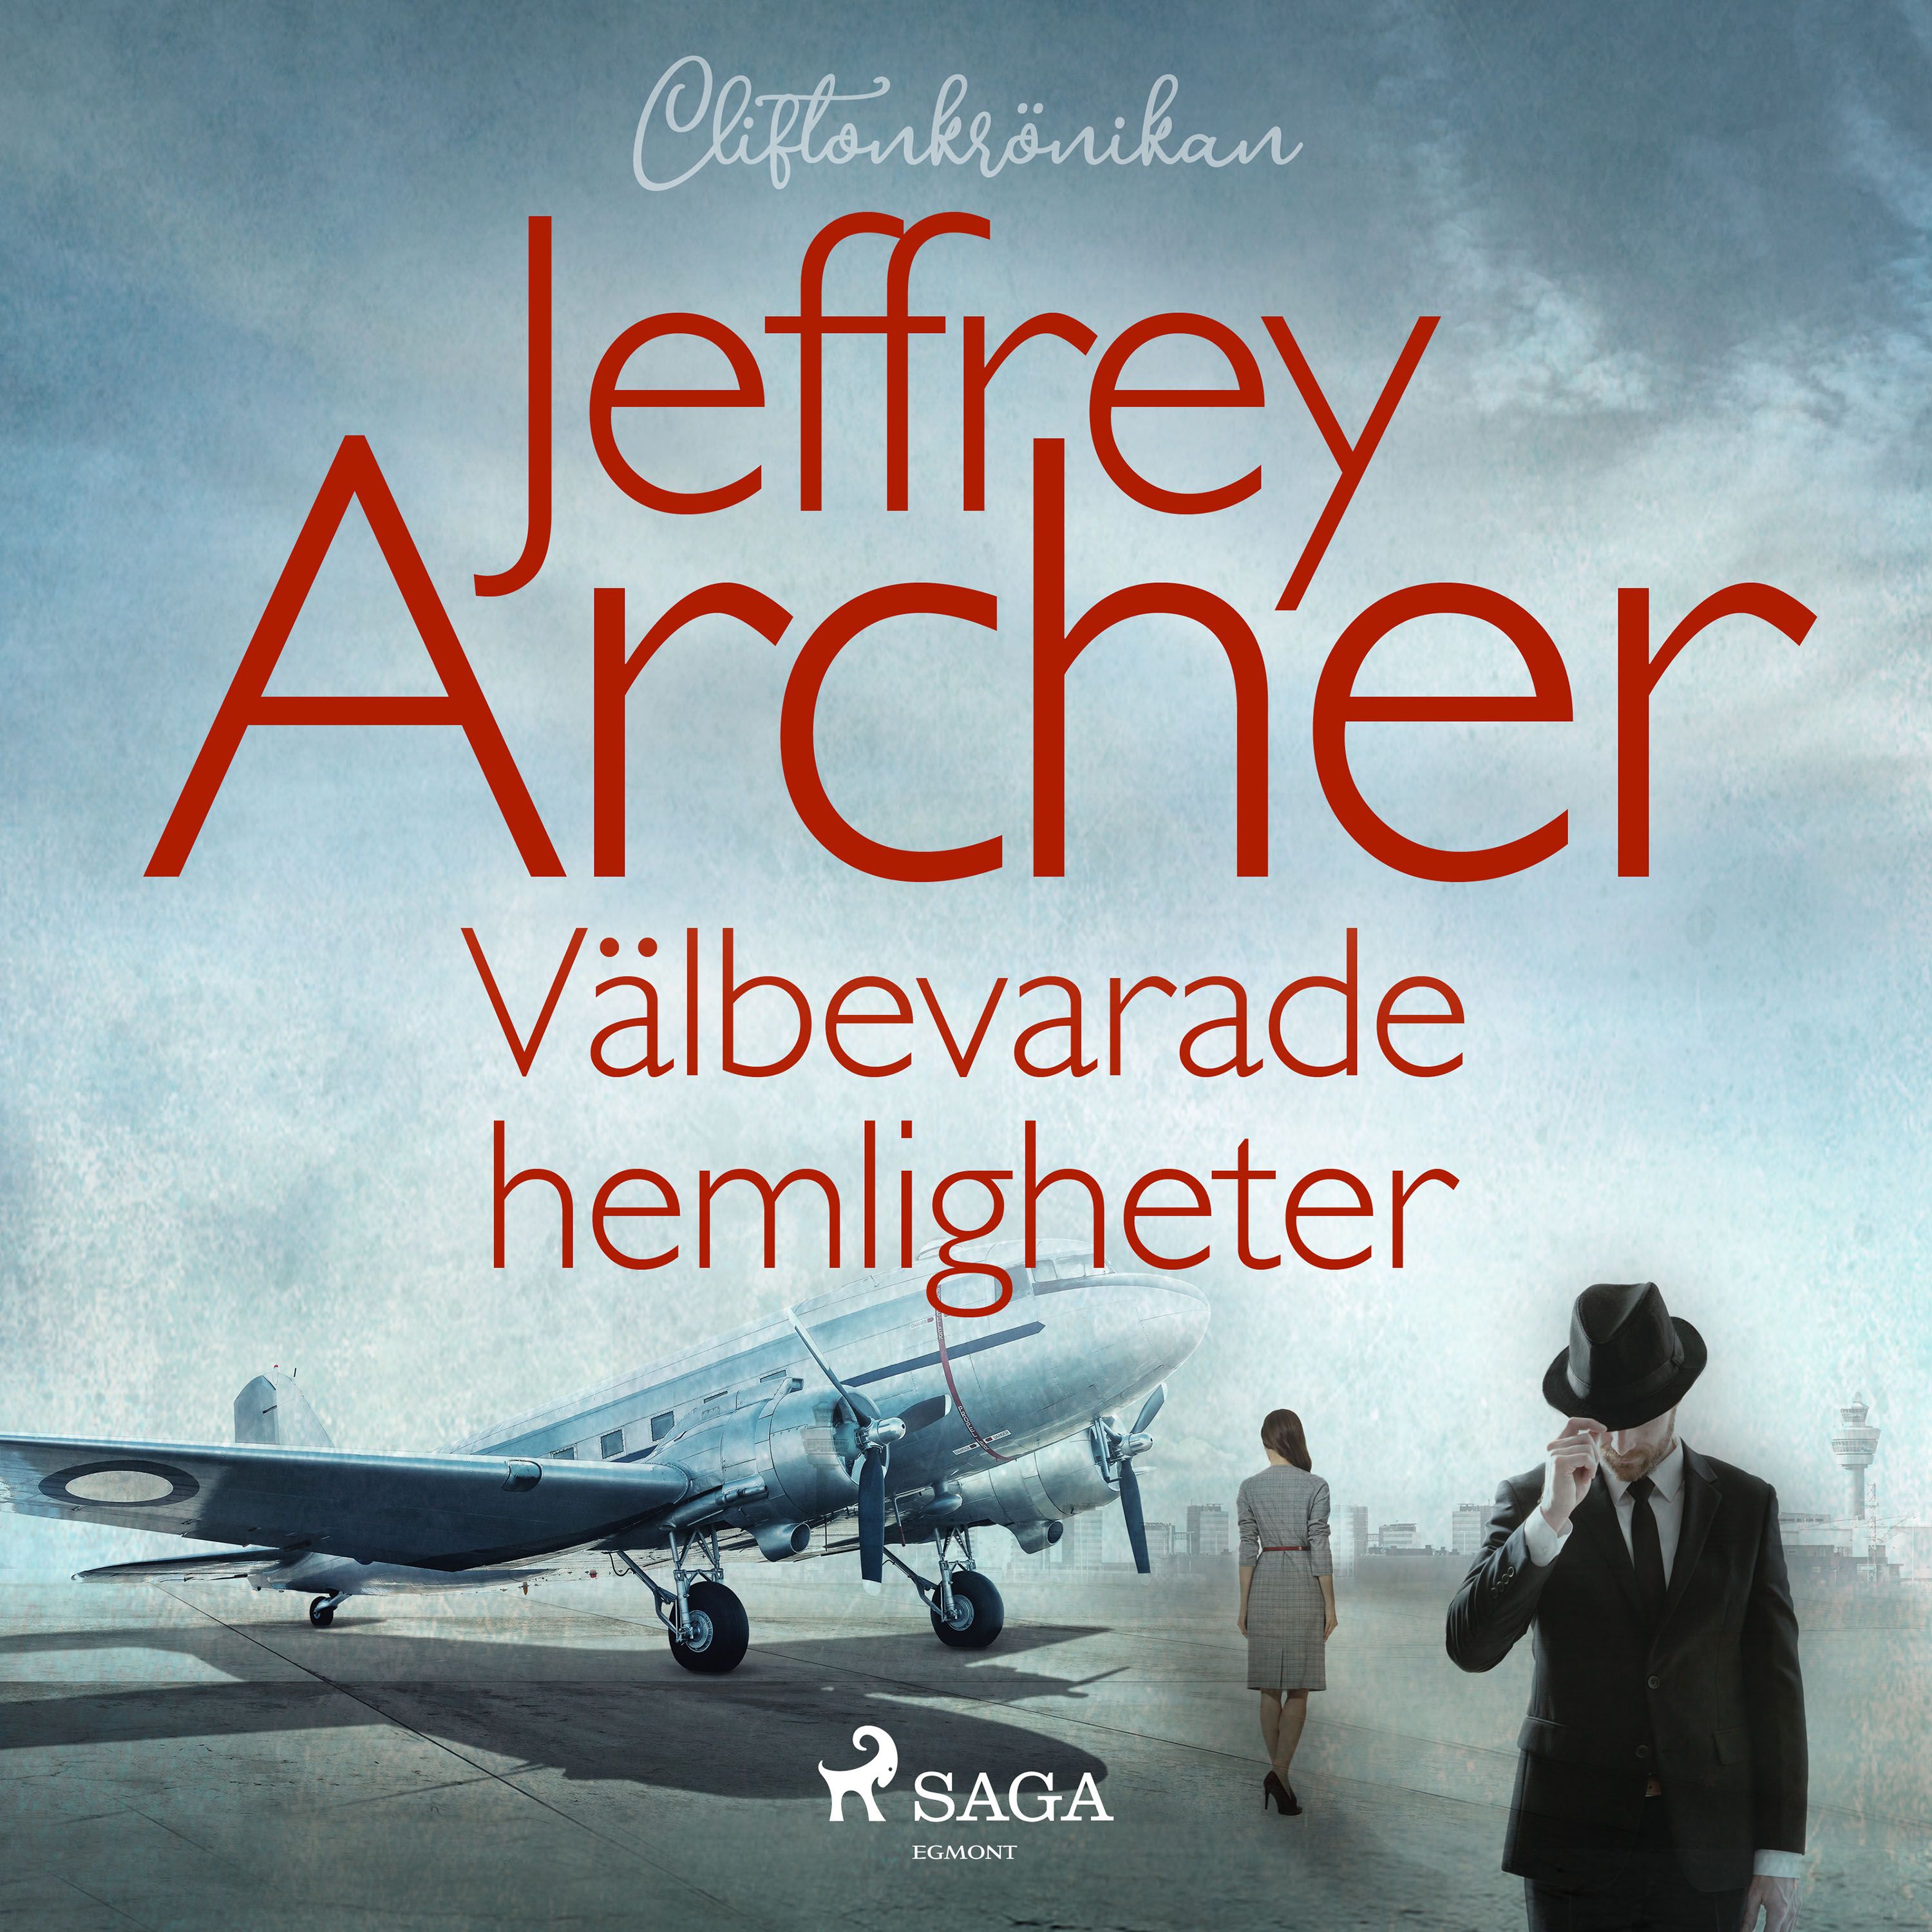 Välbevarade hemligheter, audiobook by Jeffrey Archer